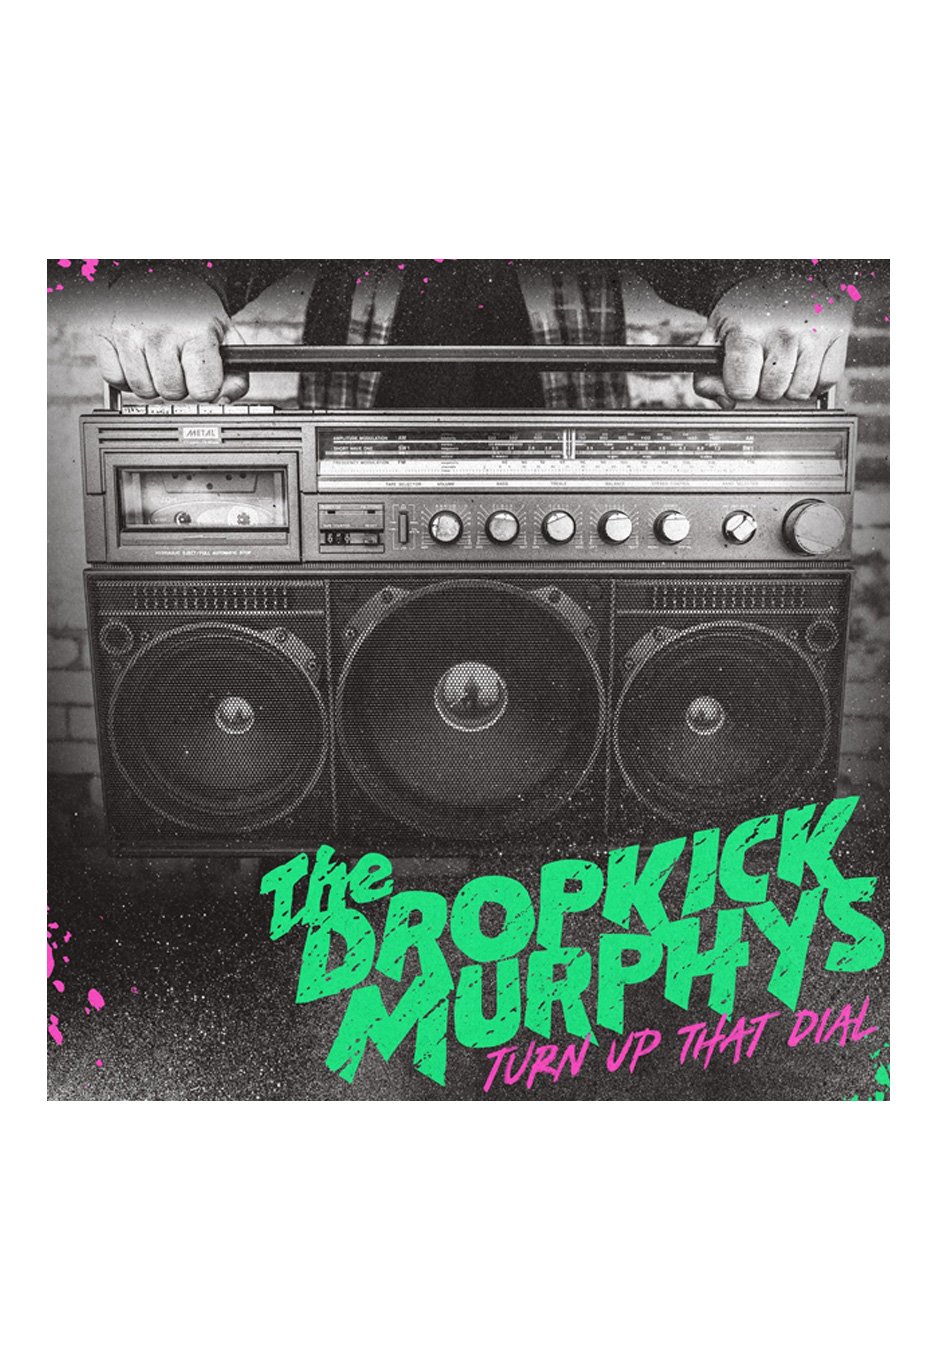 Dropkick Murphys - Turn Up That Dial - Digipak CD